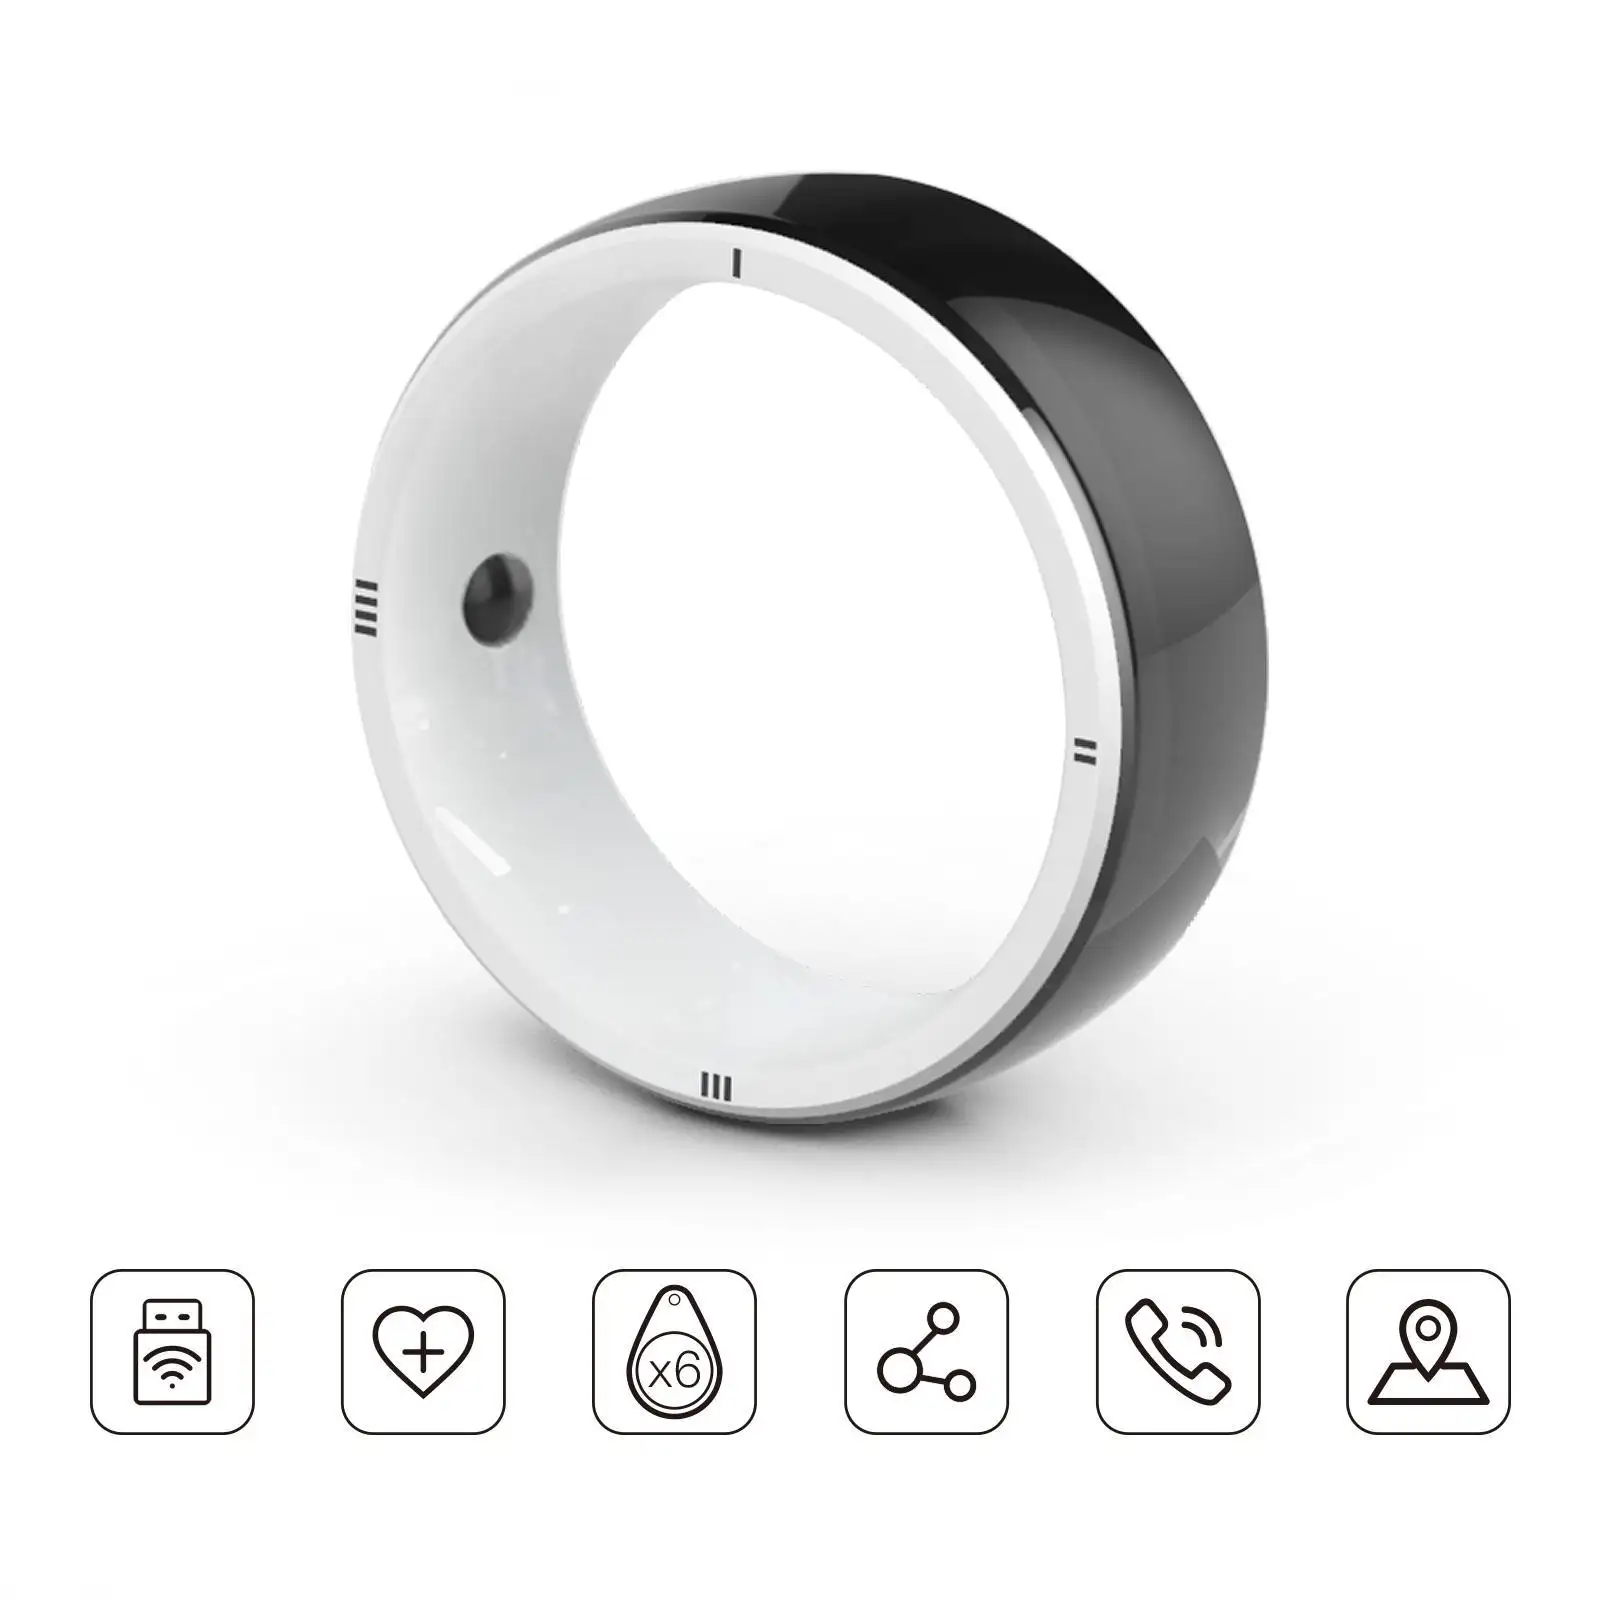 JAKCOM R5 Smart Ring Nuevo Smart Ring Super valor que la cabeza de trípode engranada 800x AV out proveedores grapa bobina PXN fightstick